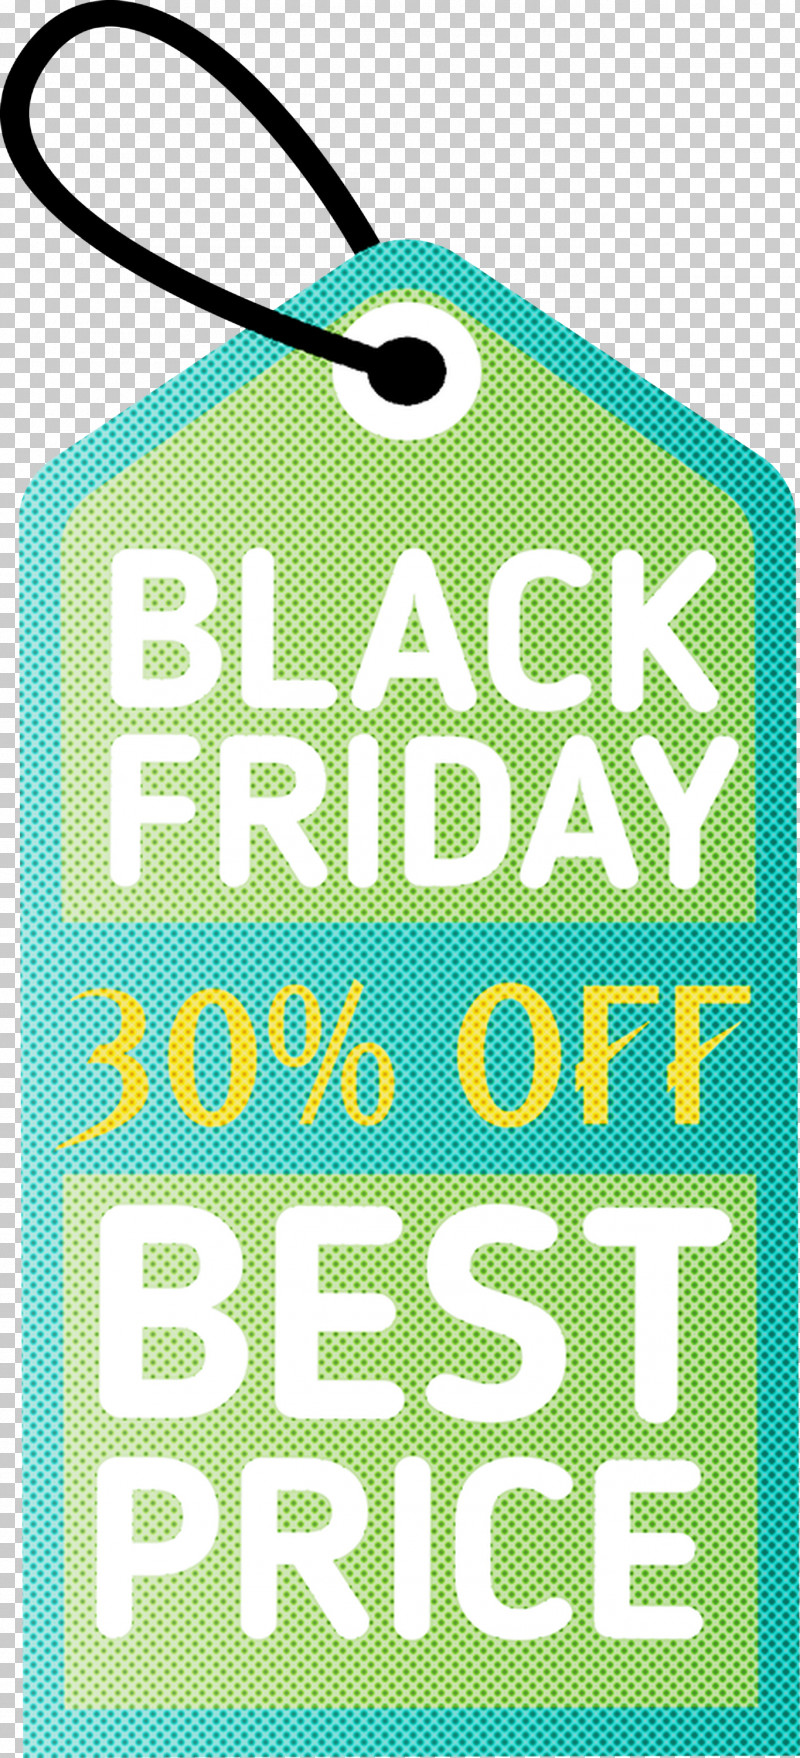 Black Friday Sale Black Friday Discount Black Friday PNG, Clipart, Area, Black Friday, Black Friday Discount, Black Friday Sale, Green Free PNG Download